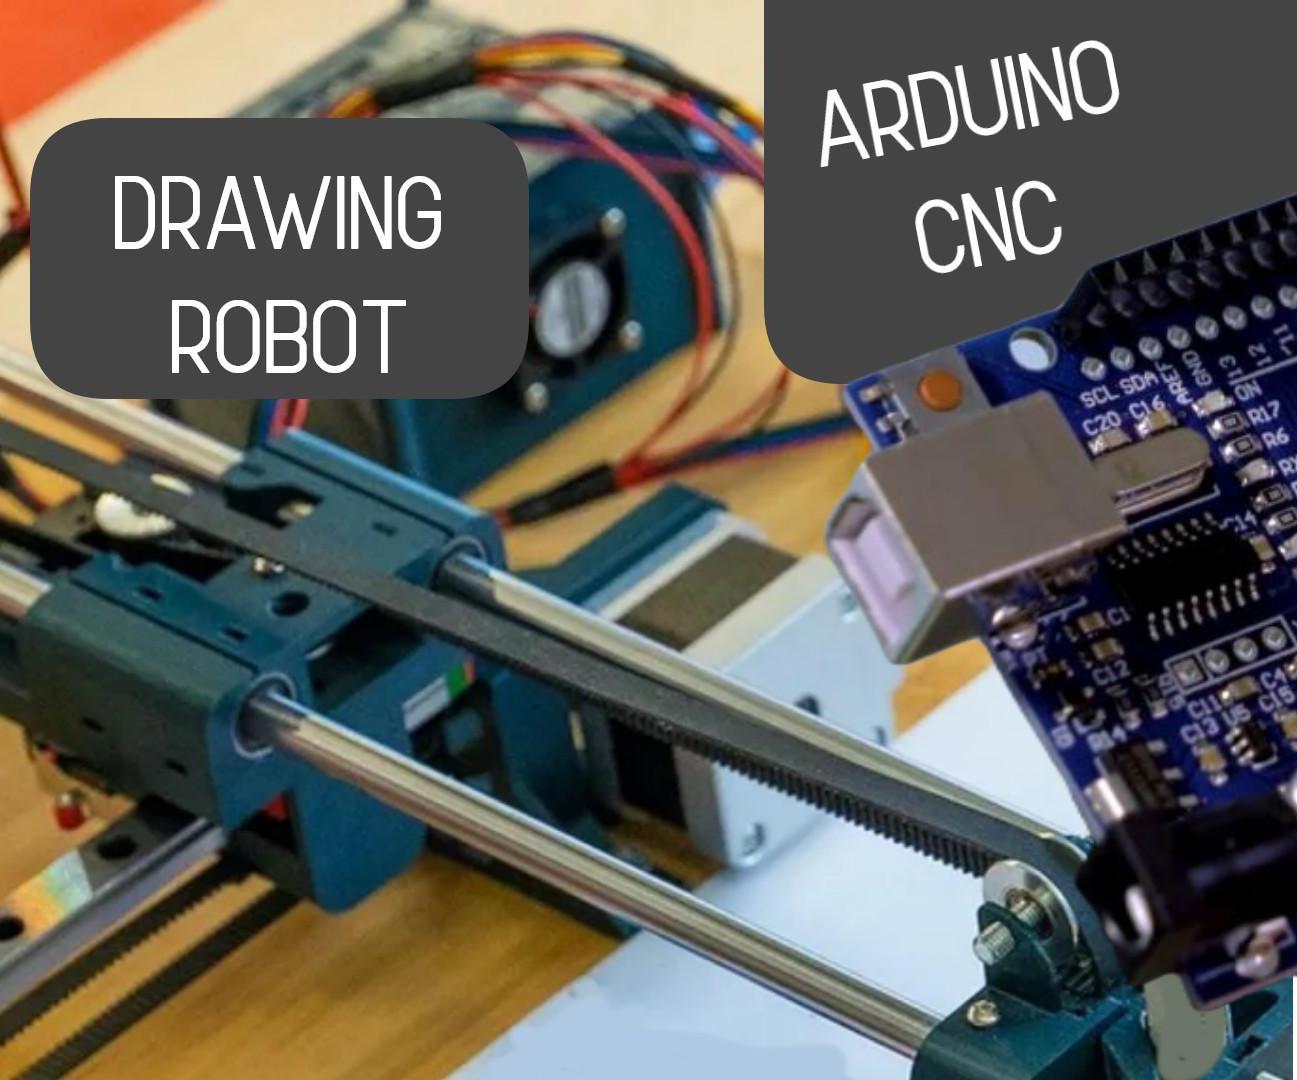 Art Meets Technology: Create a CNC DrawingBot Using Arduino!